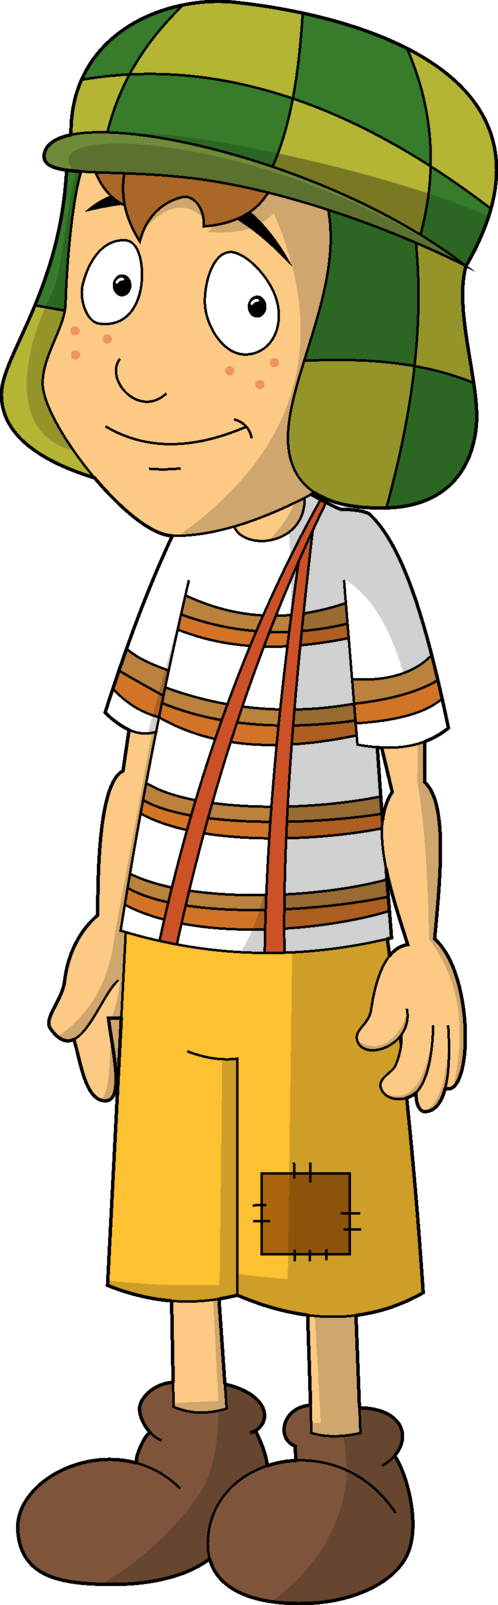 El Chavo Animado Personaje El Chavo Animado by ncontreras207 on DeviantArt